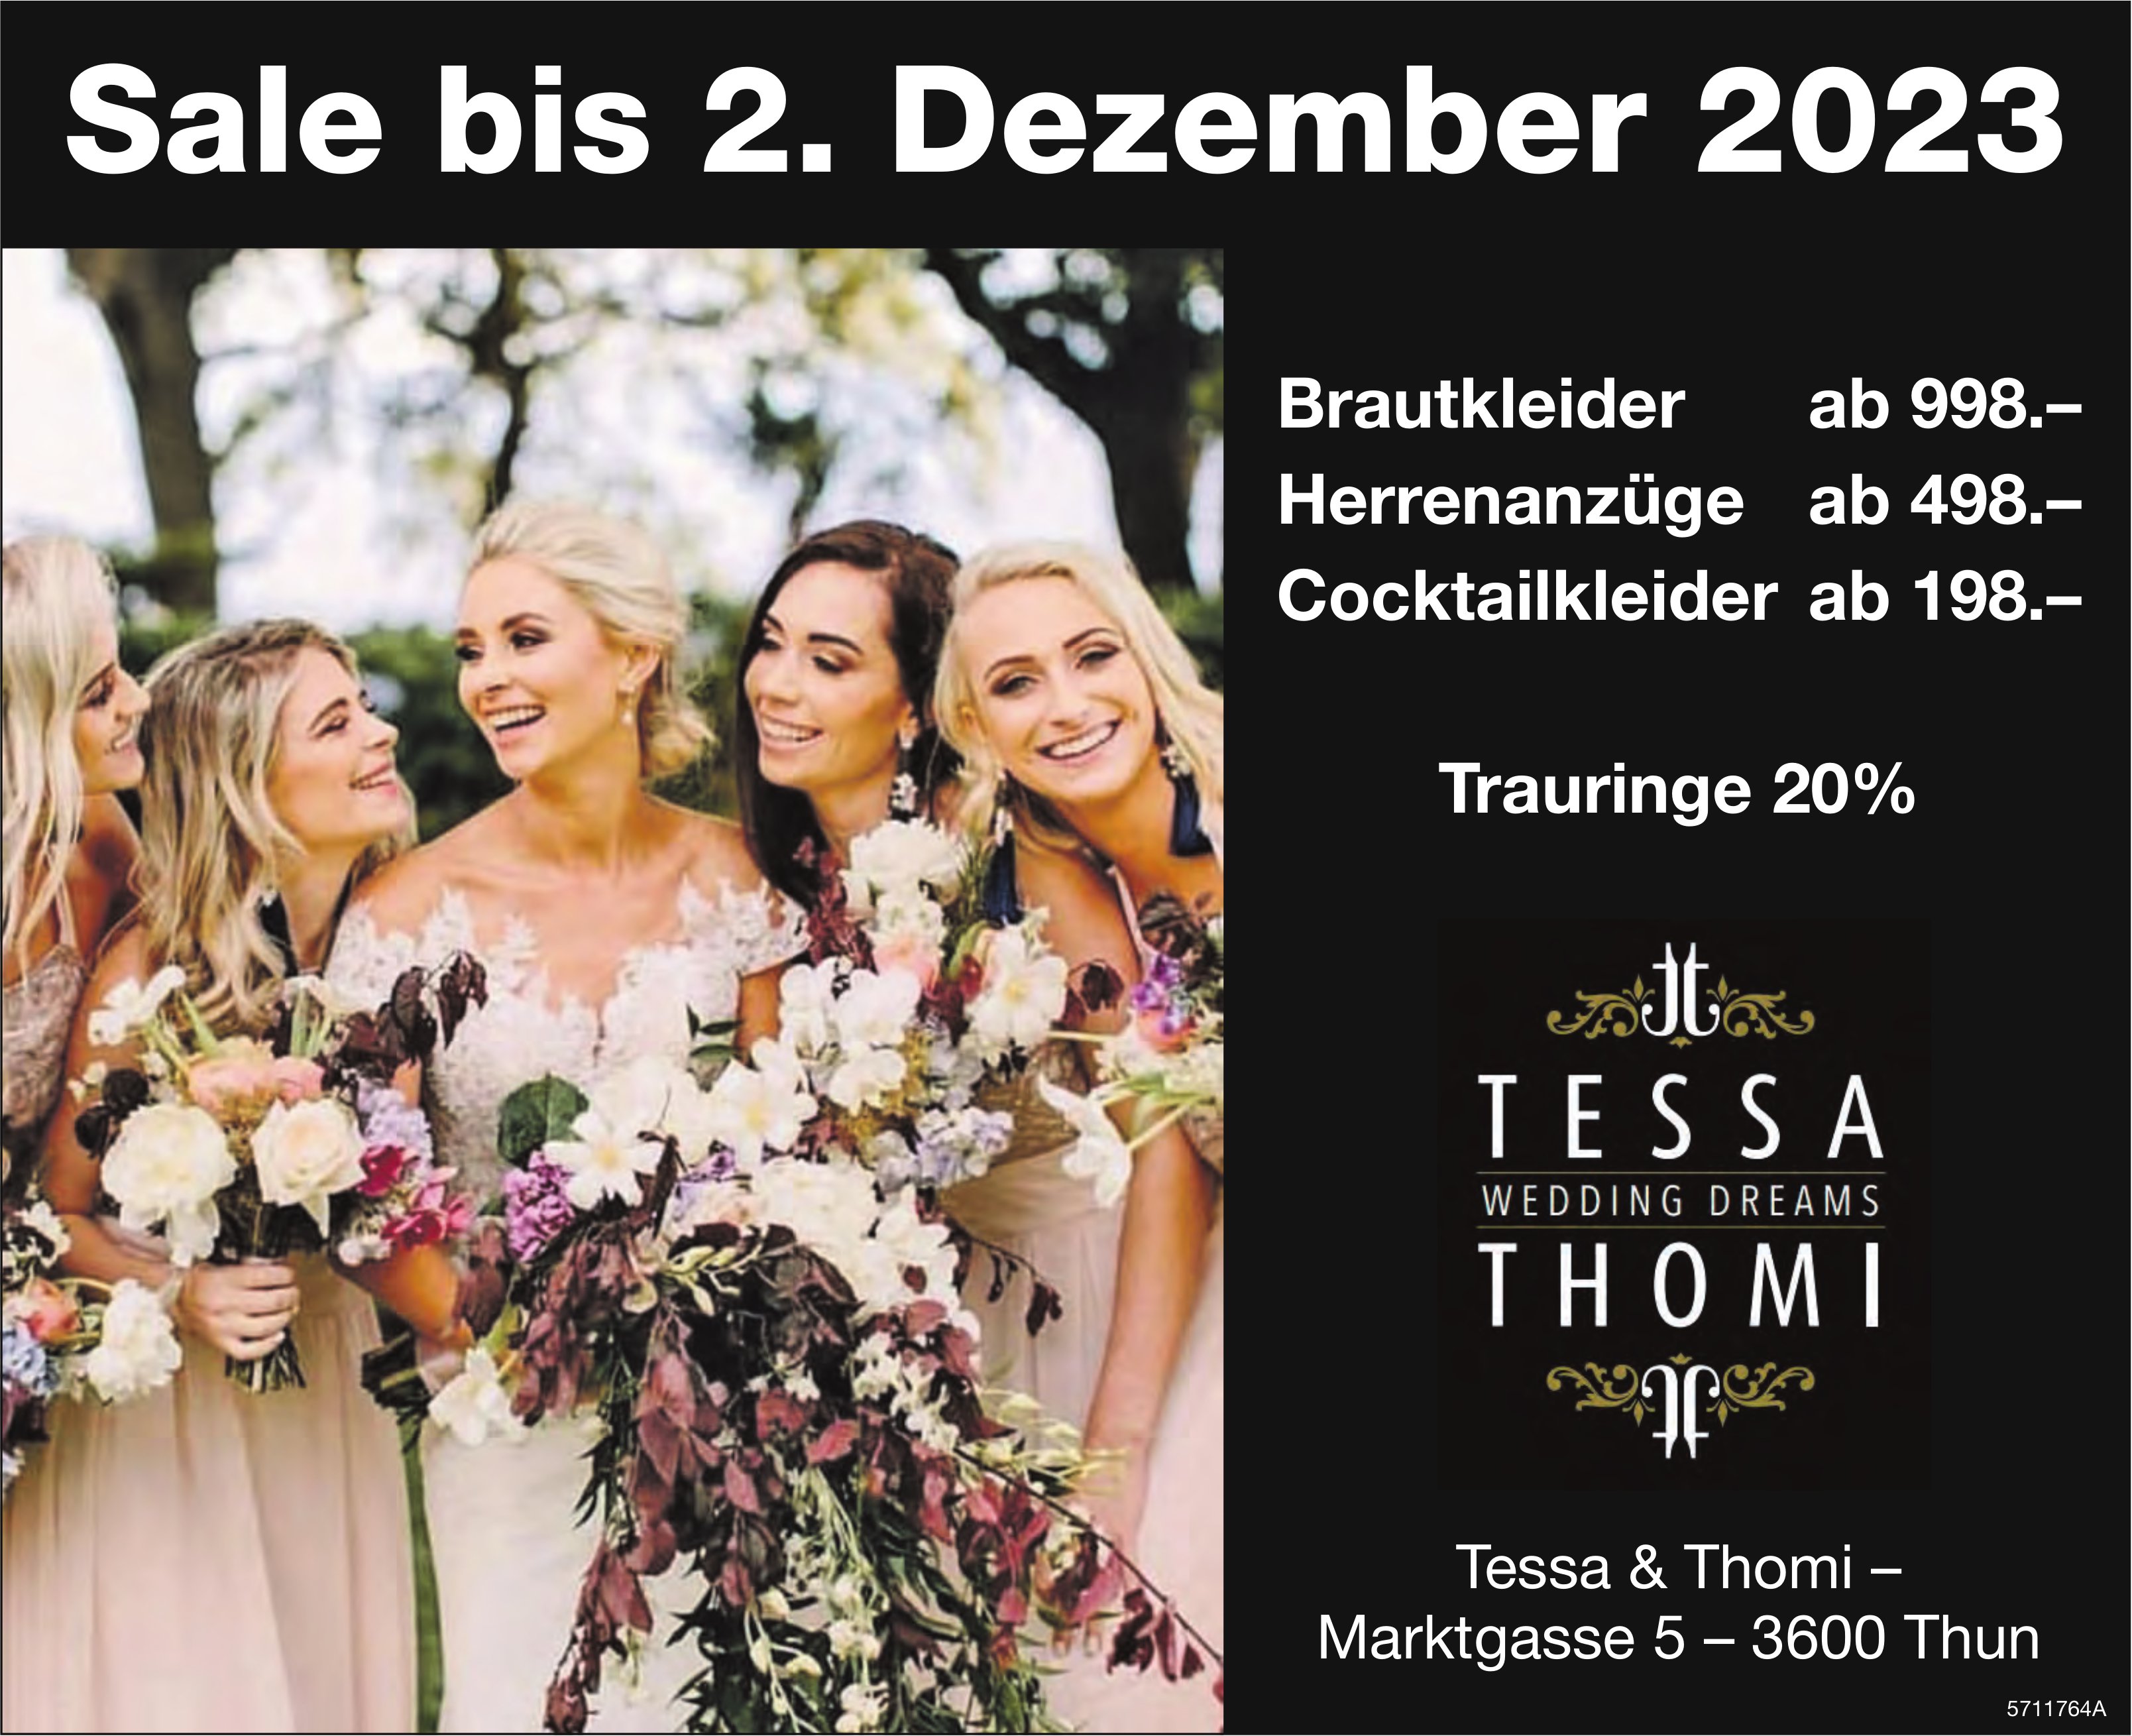 Tessa & Thomi Wedding Dreams, Thun - Sale bis 2. Dezember 2023